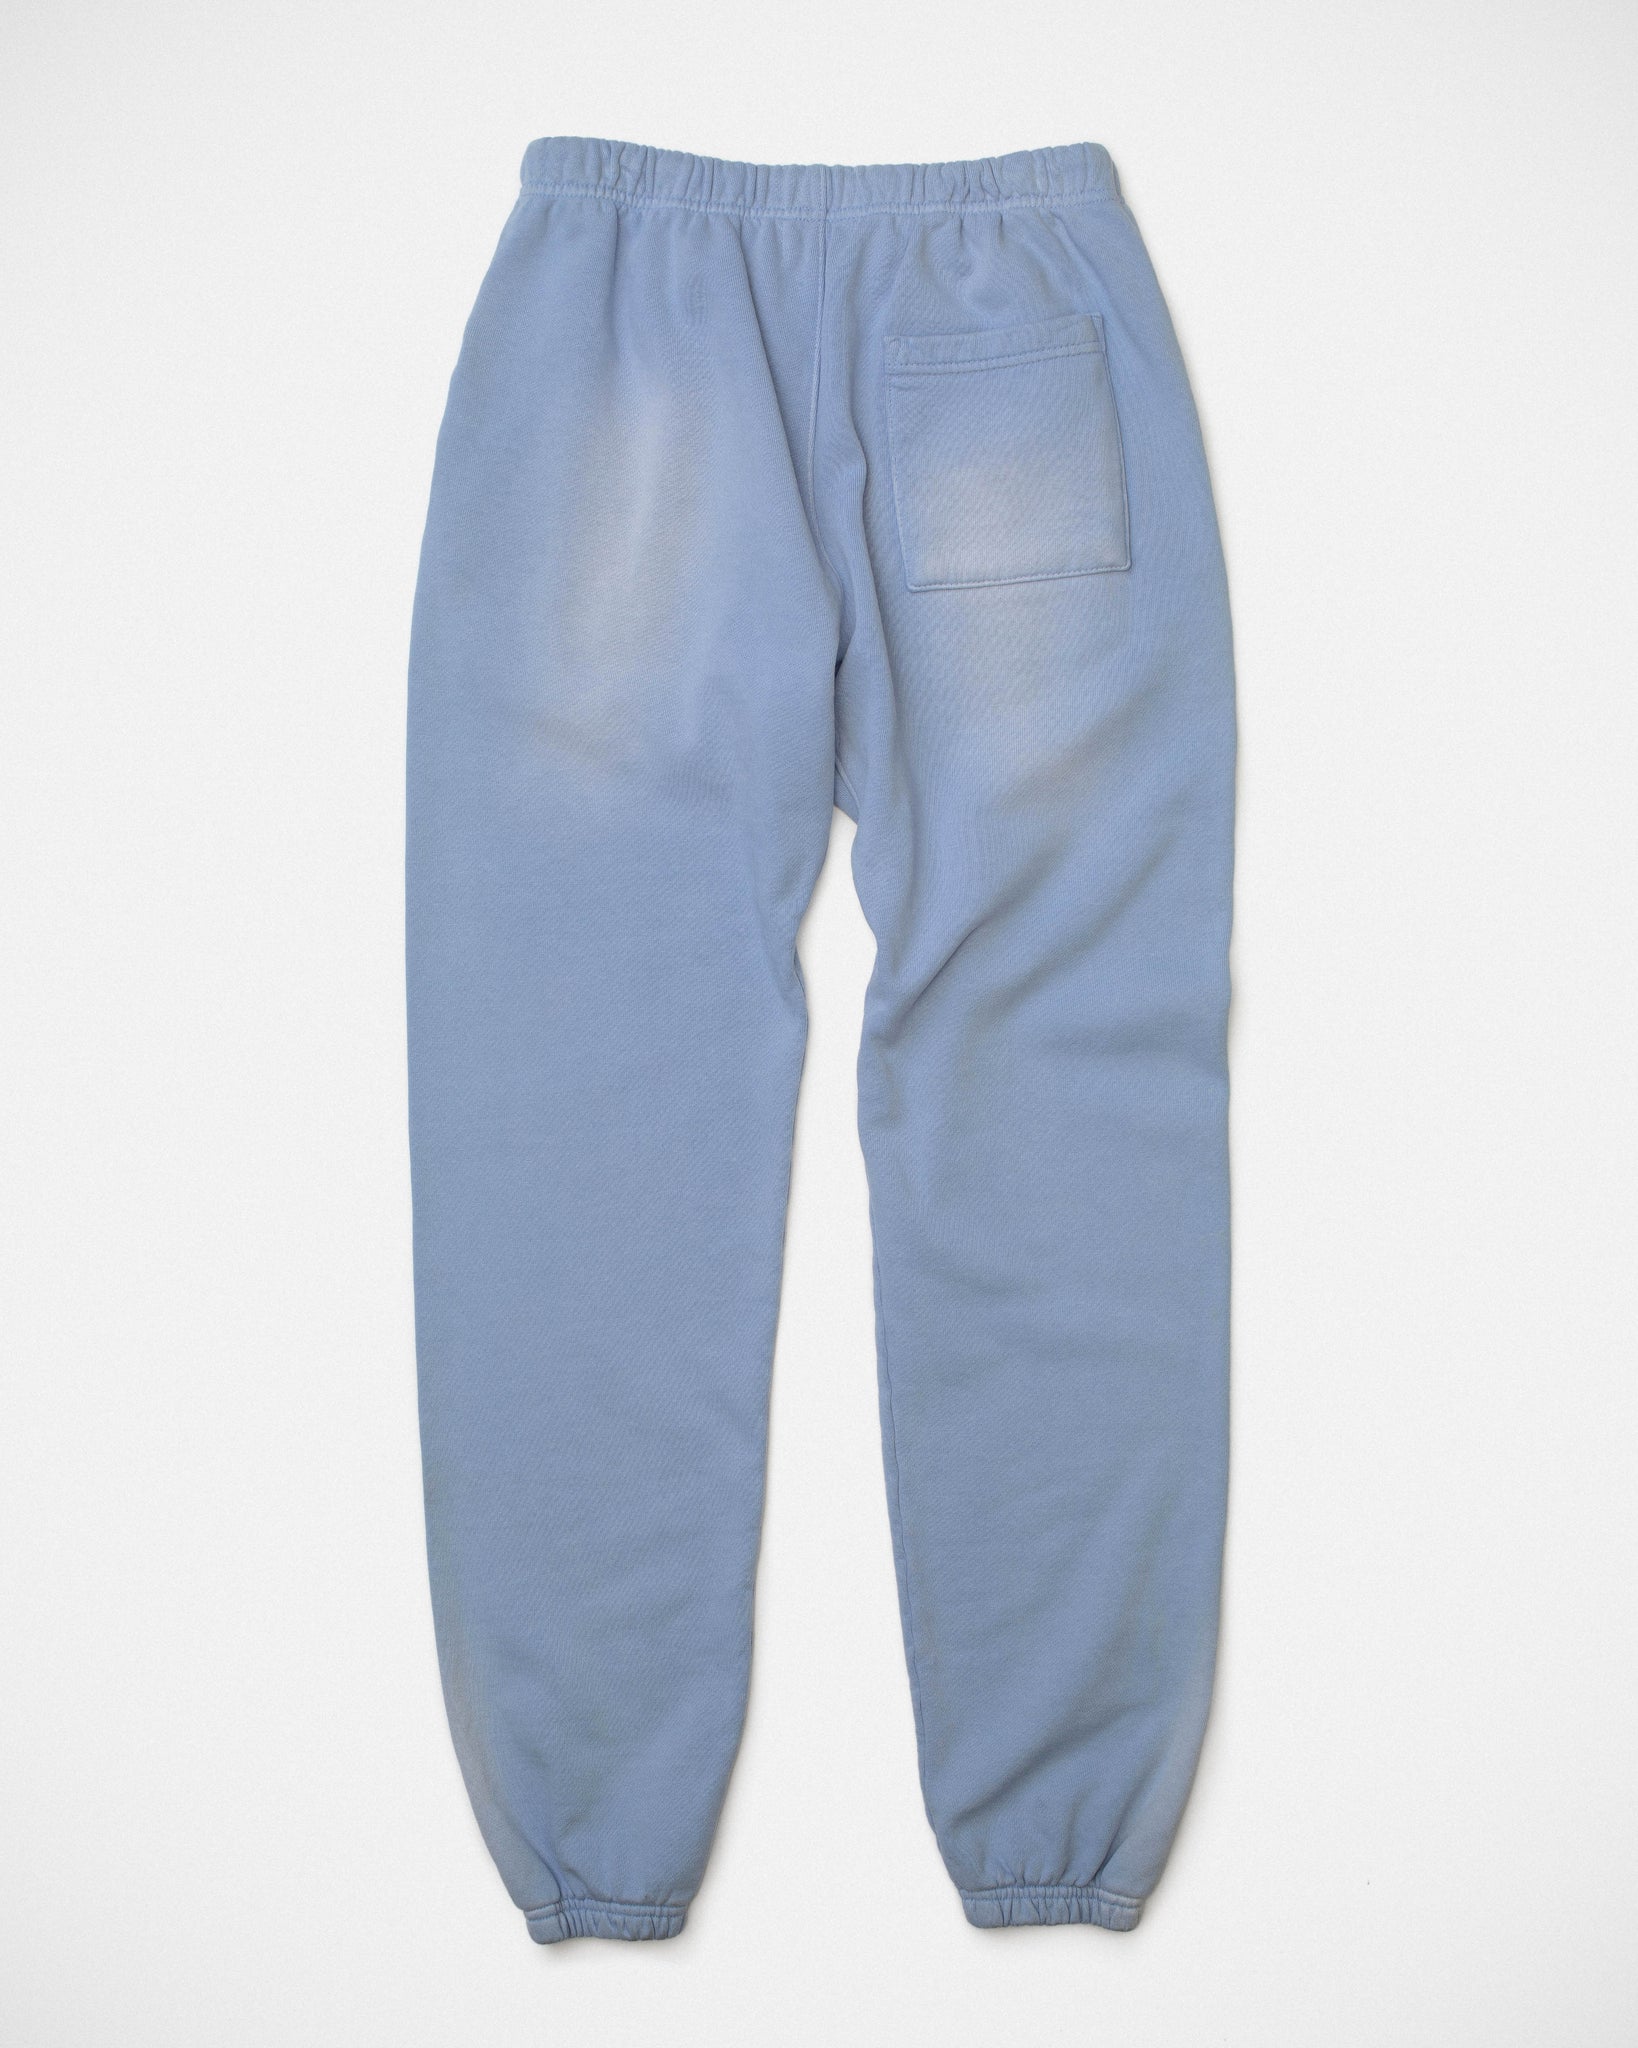 Goom Studio Sweatpants - Sun faded Rodium blue